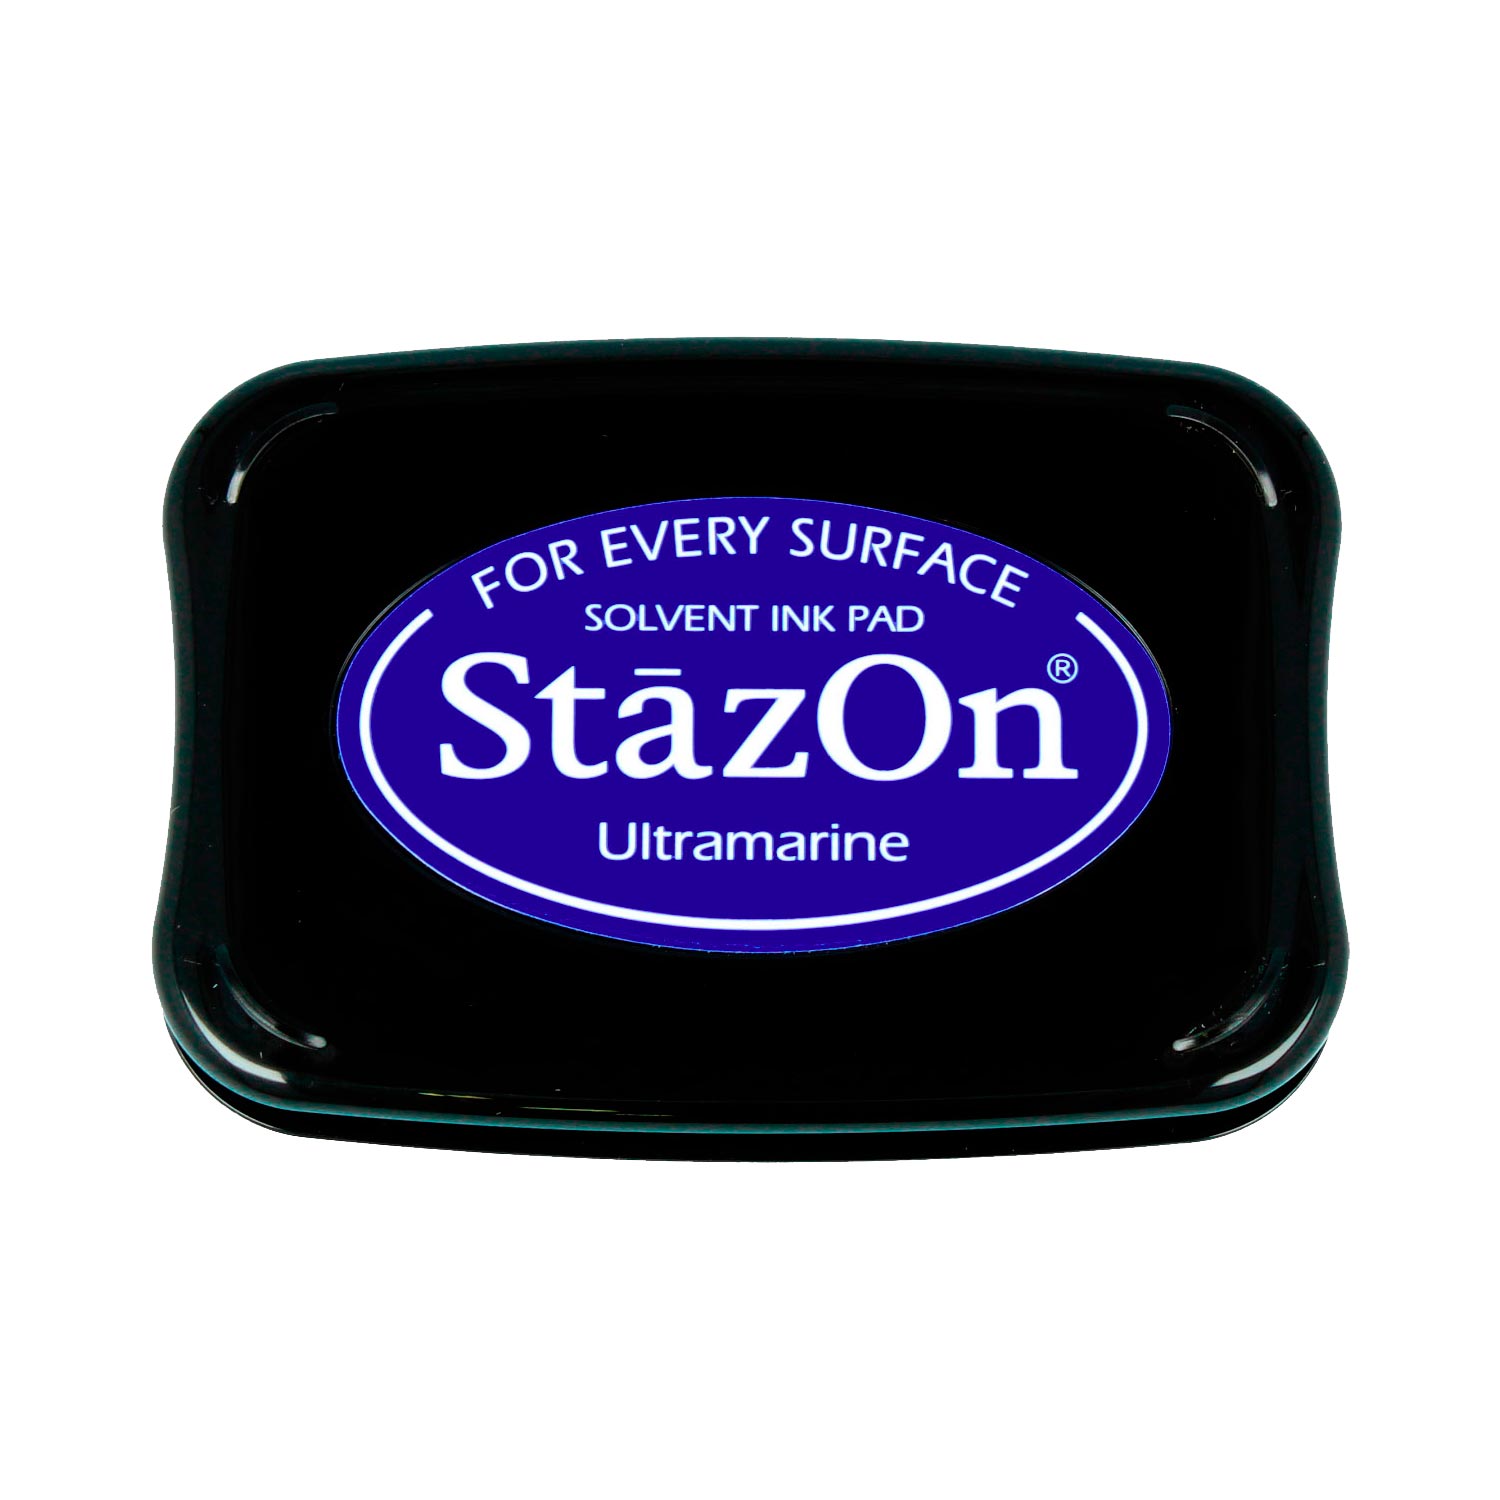 StazOn Solvent Ink Pad Ultramarine